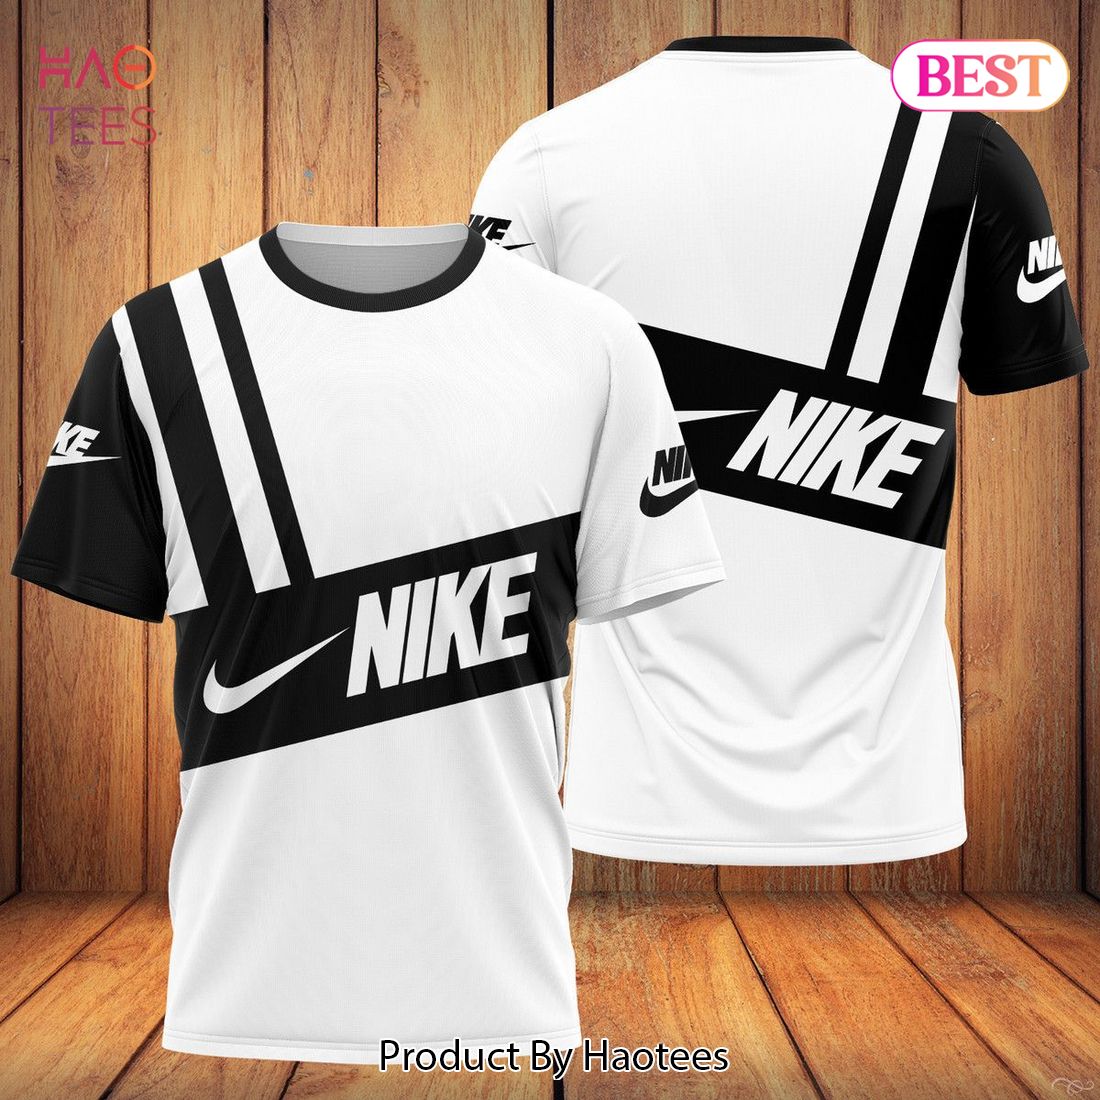 BEST Nike Basic Pattern Black White Luxury Brand 3D T-Shirt Limited Edition